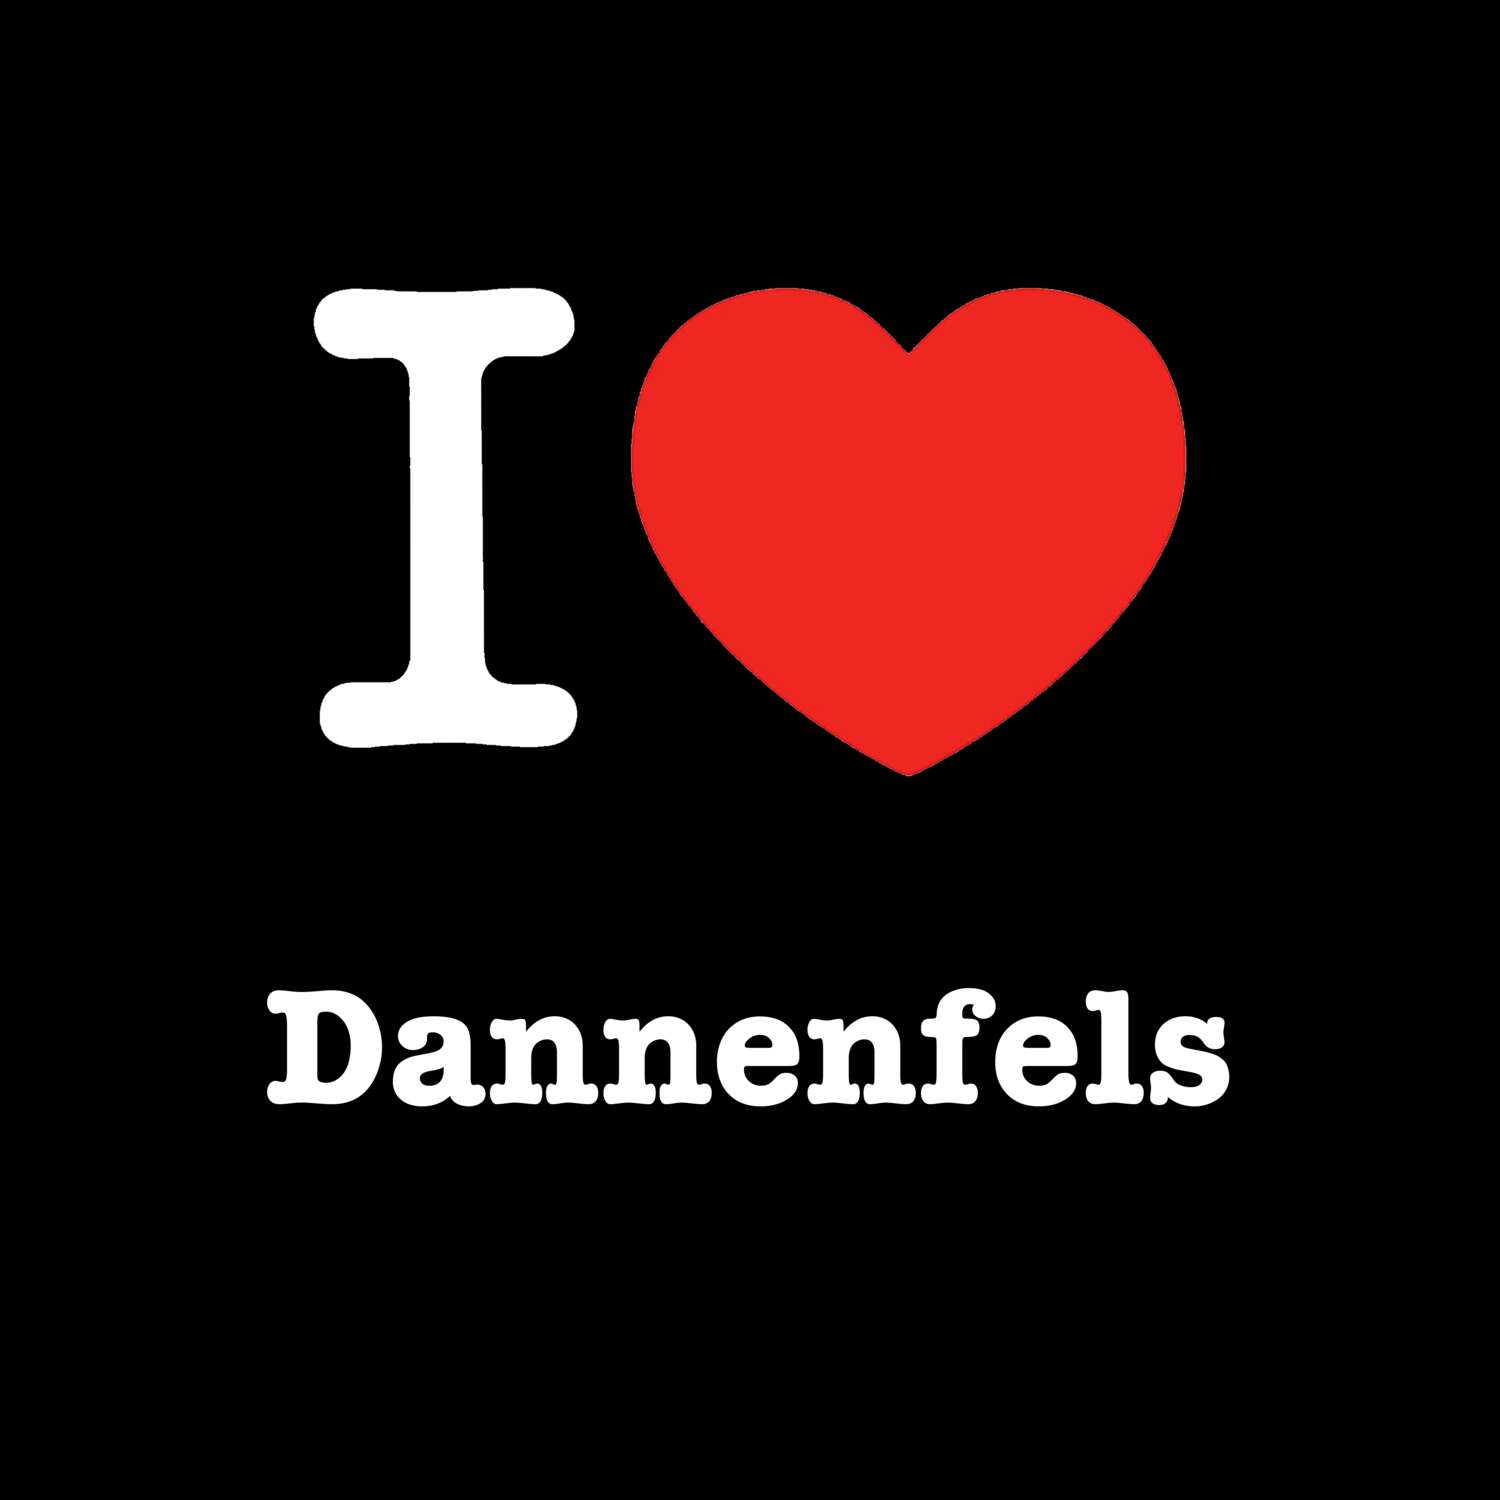 Dannenfels T-Shirt »I love«